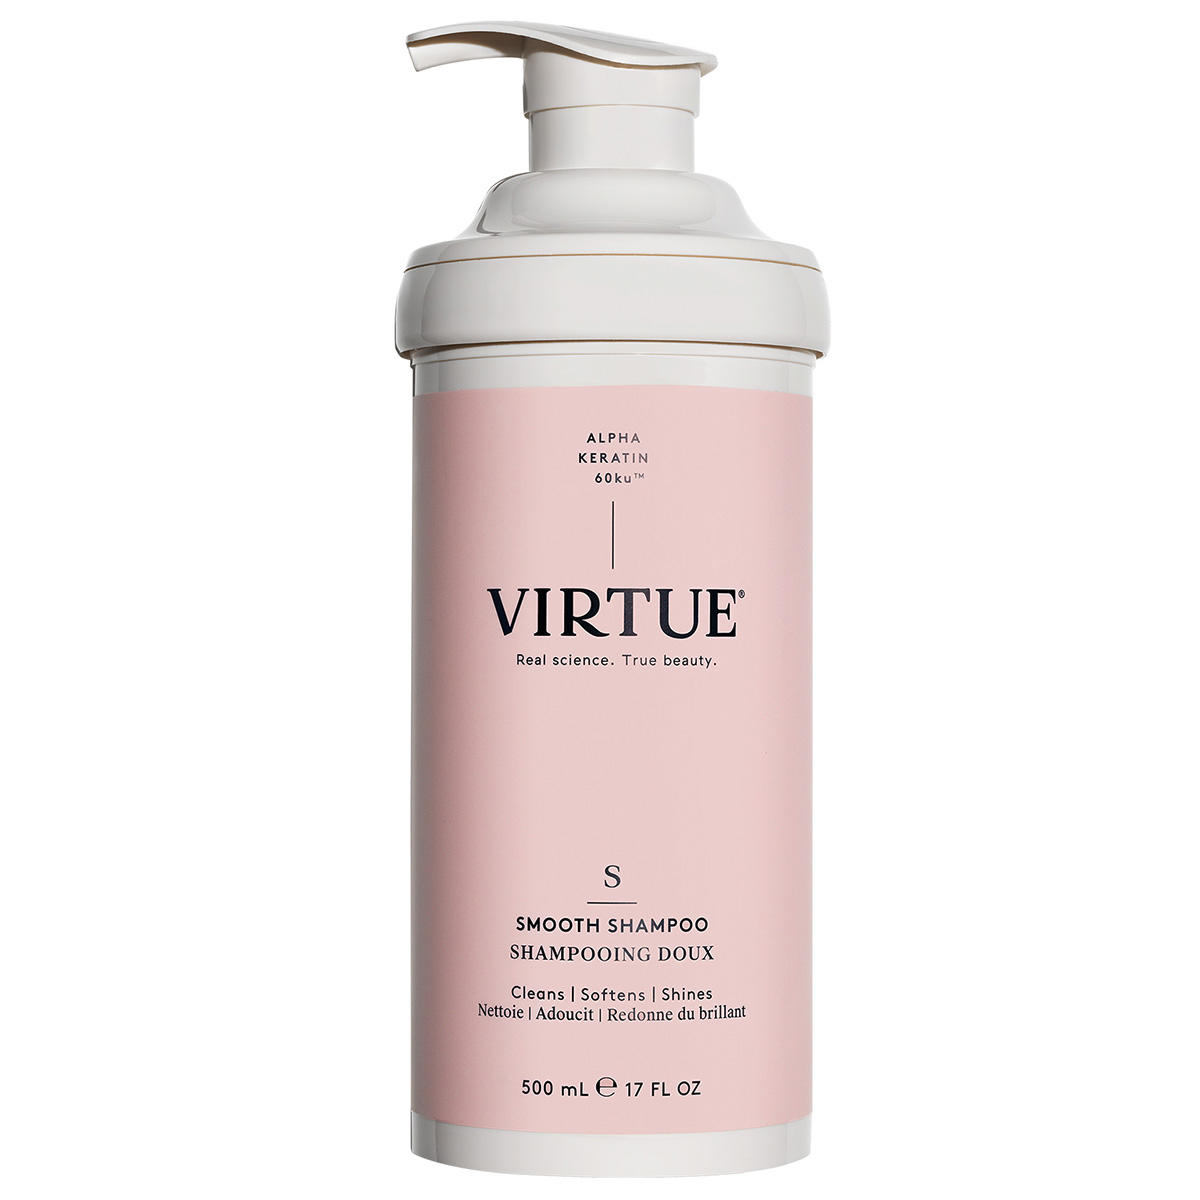 Virtue Smooth Shampoo 500 ml